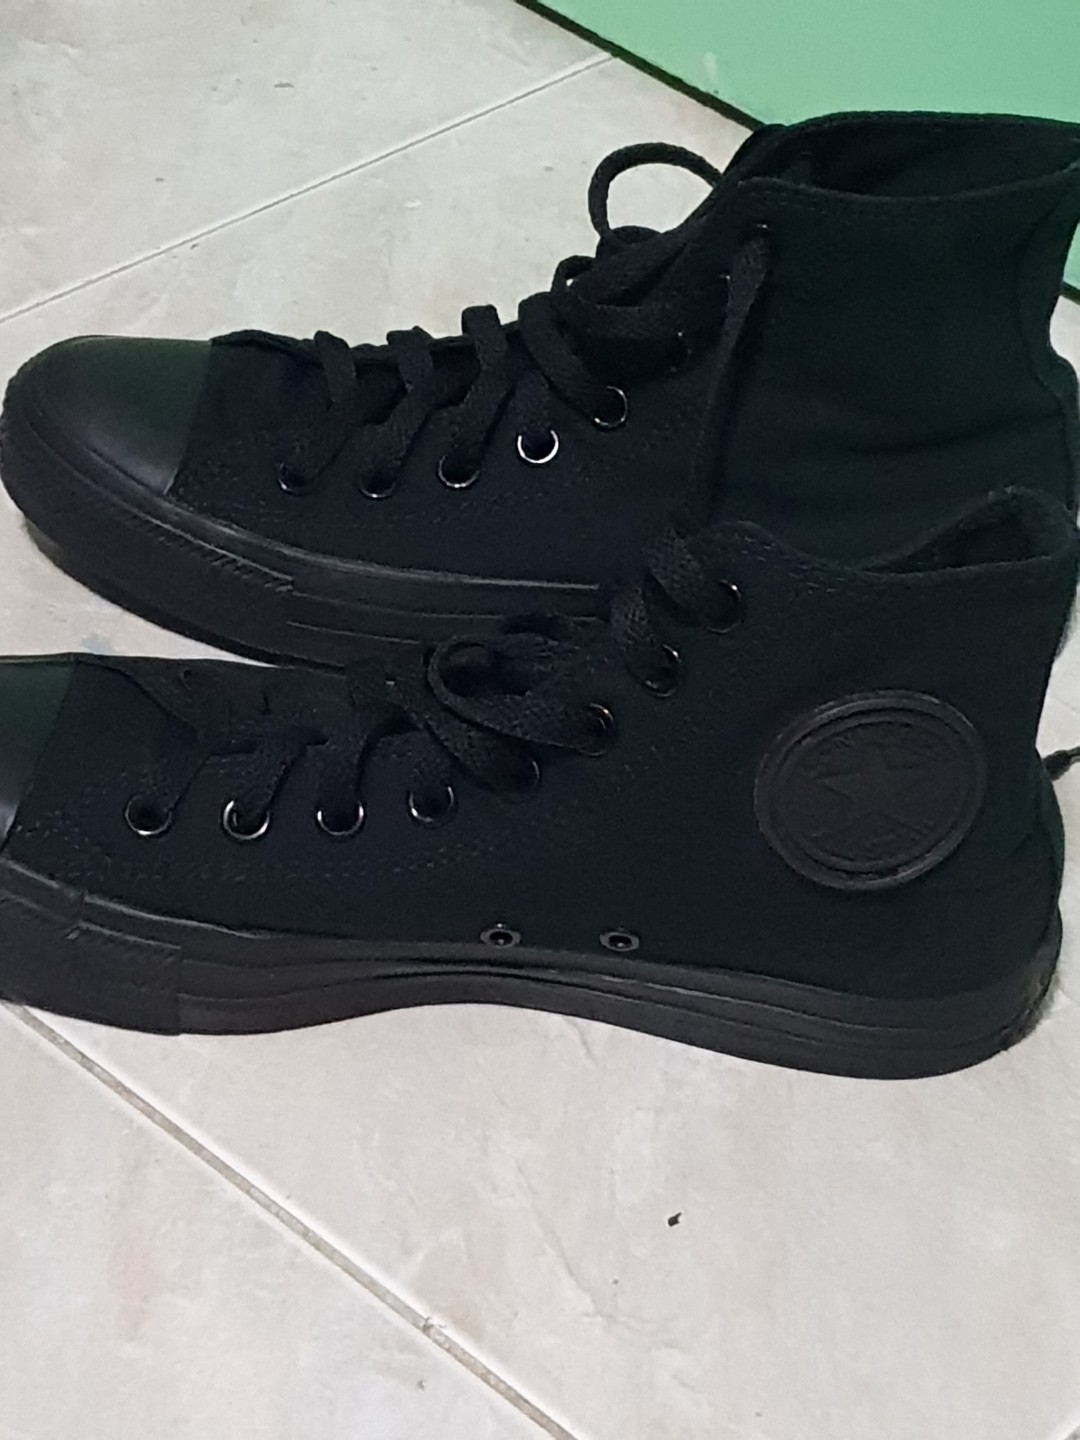 black high cut shoes